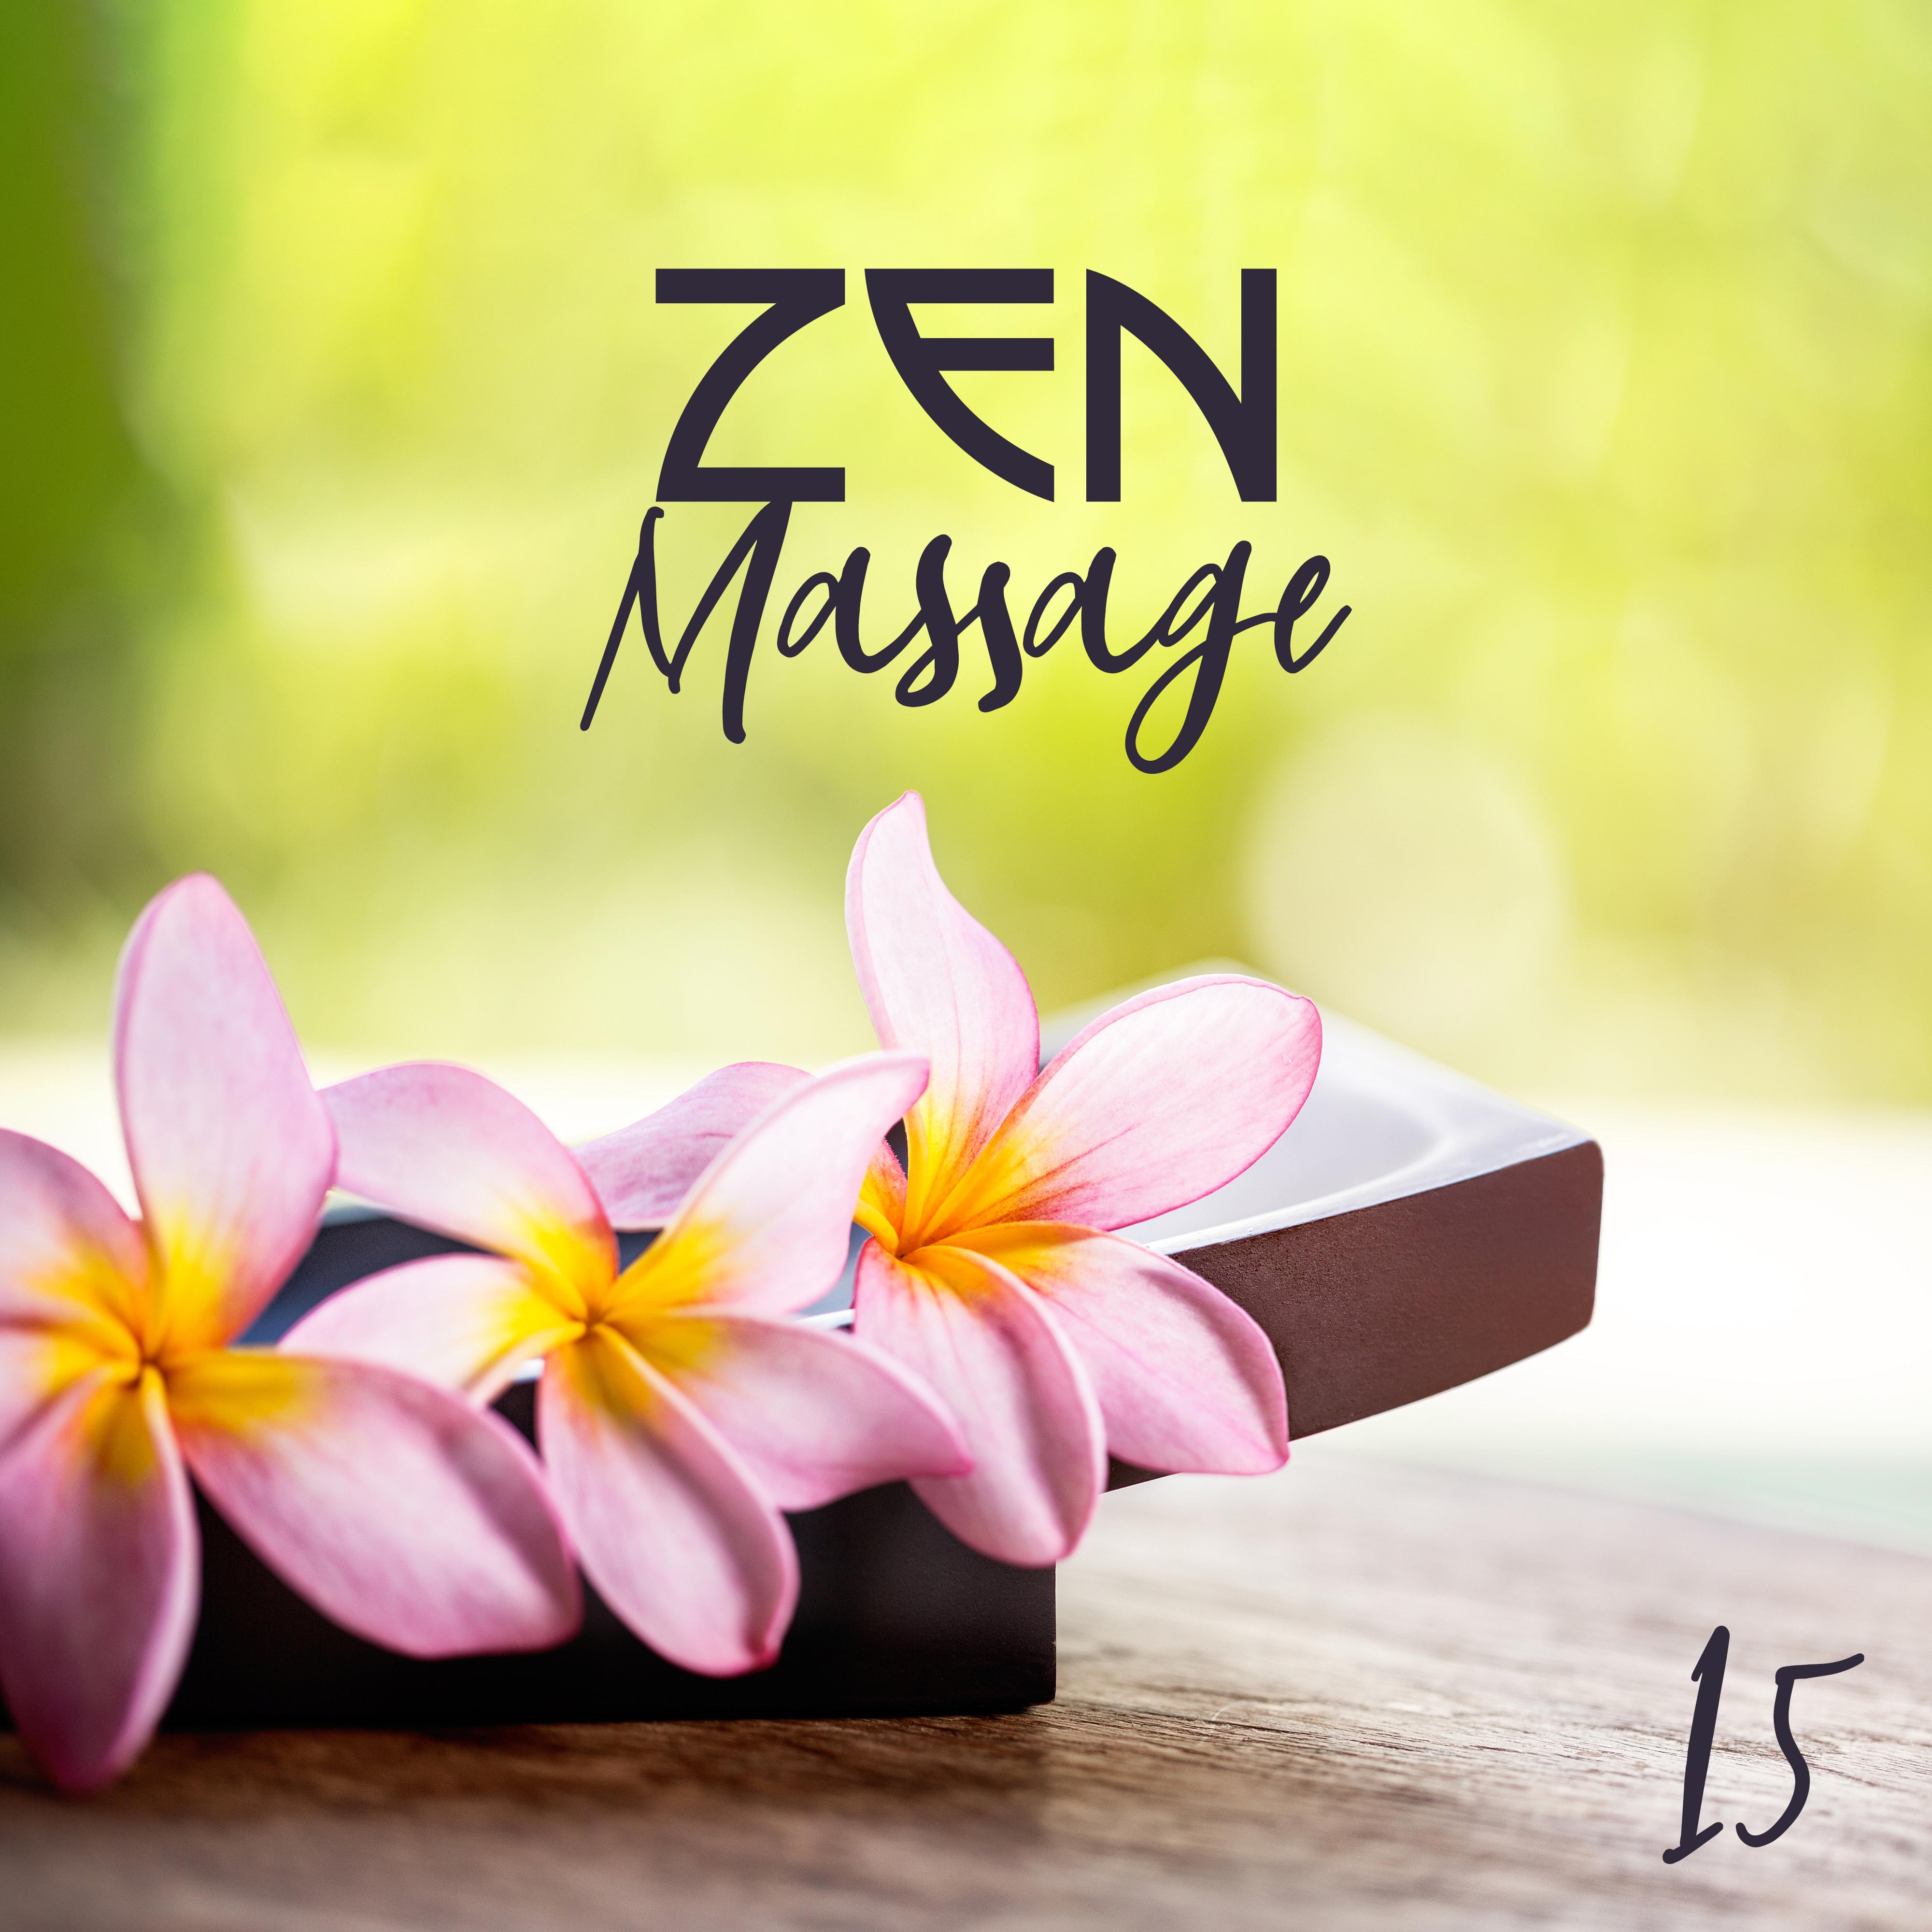 15 Zen Massage